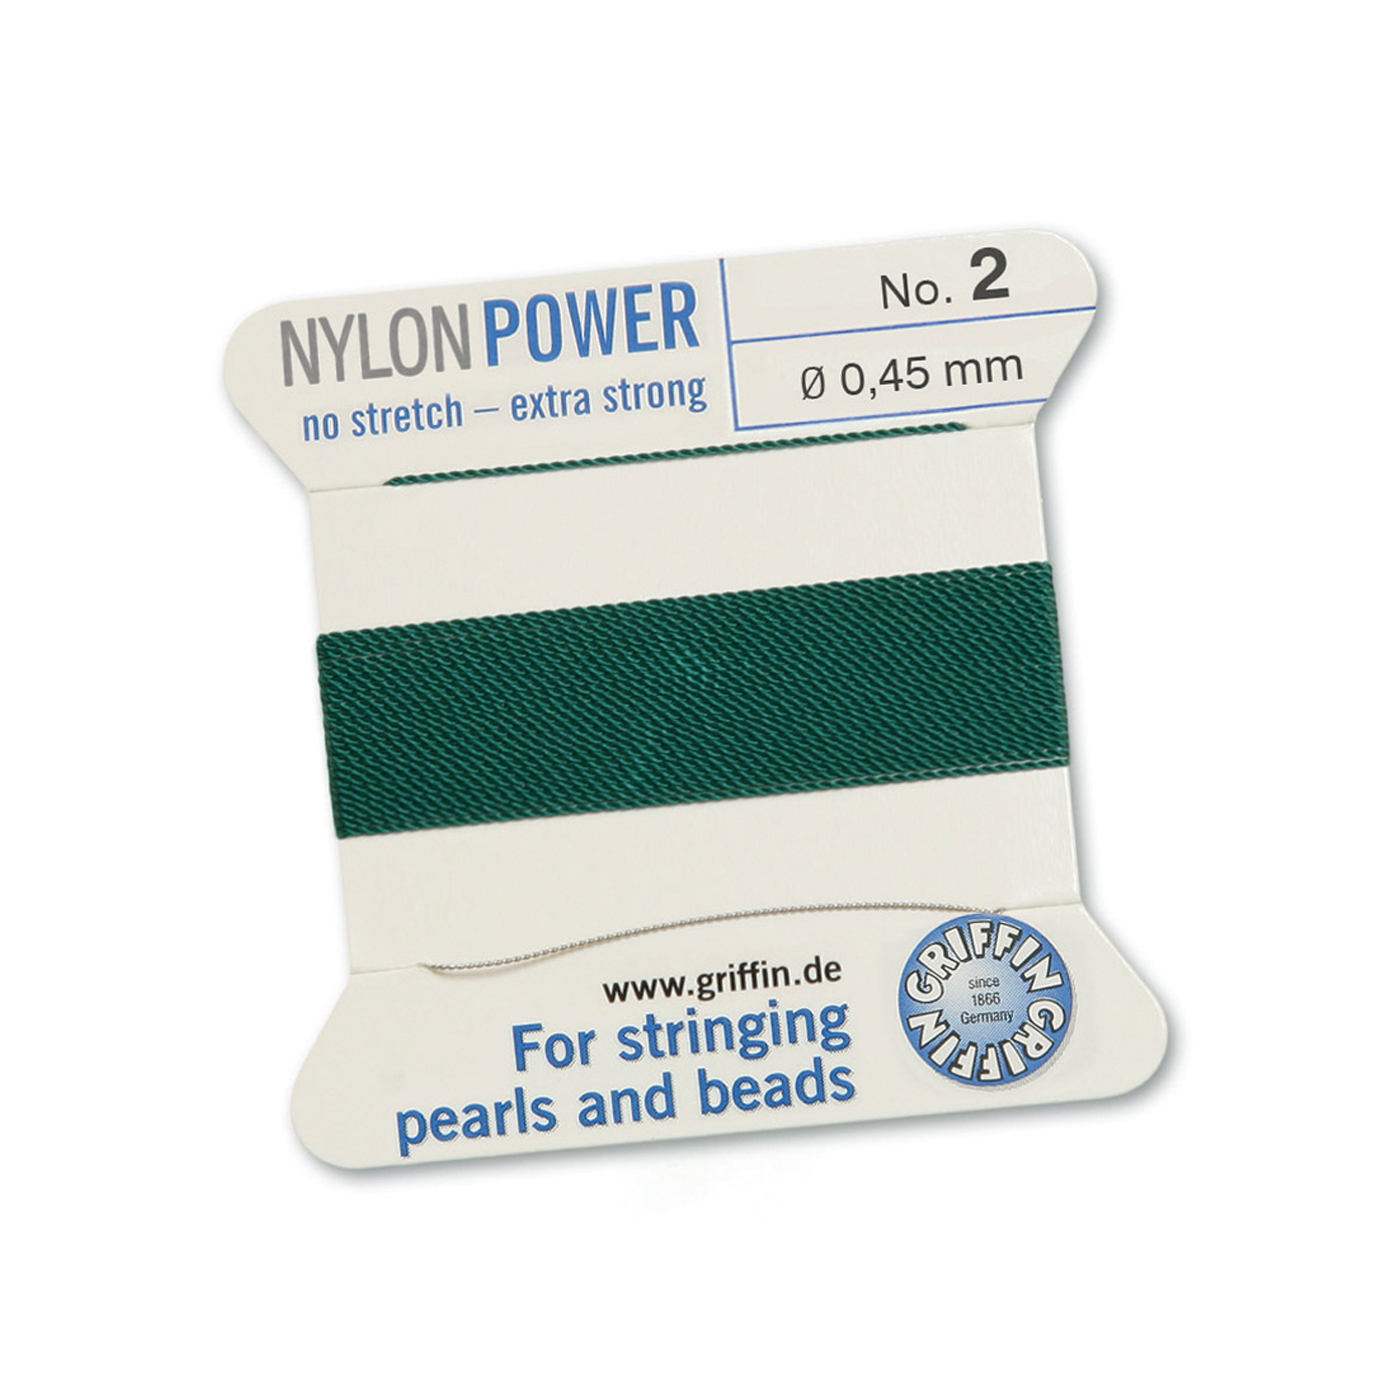 Bead Cord NylonPower, Green, No. 2 - 2 m